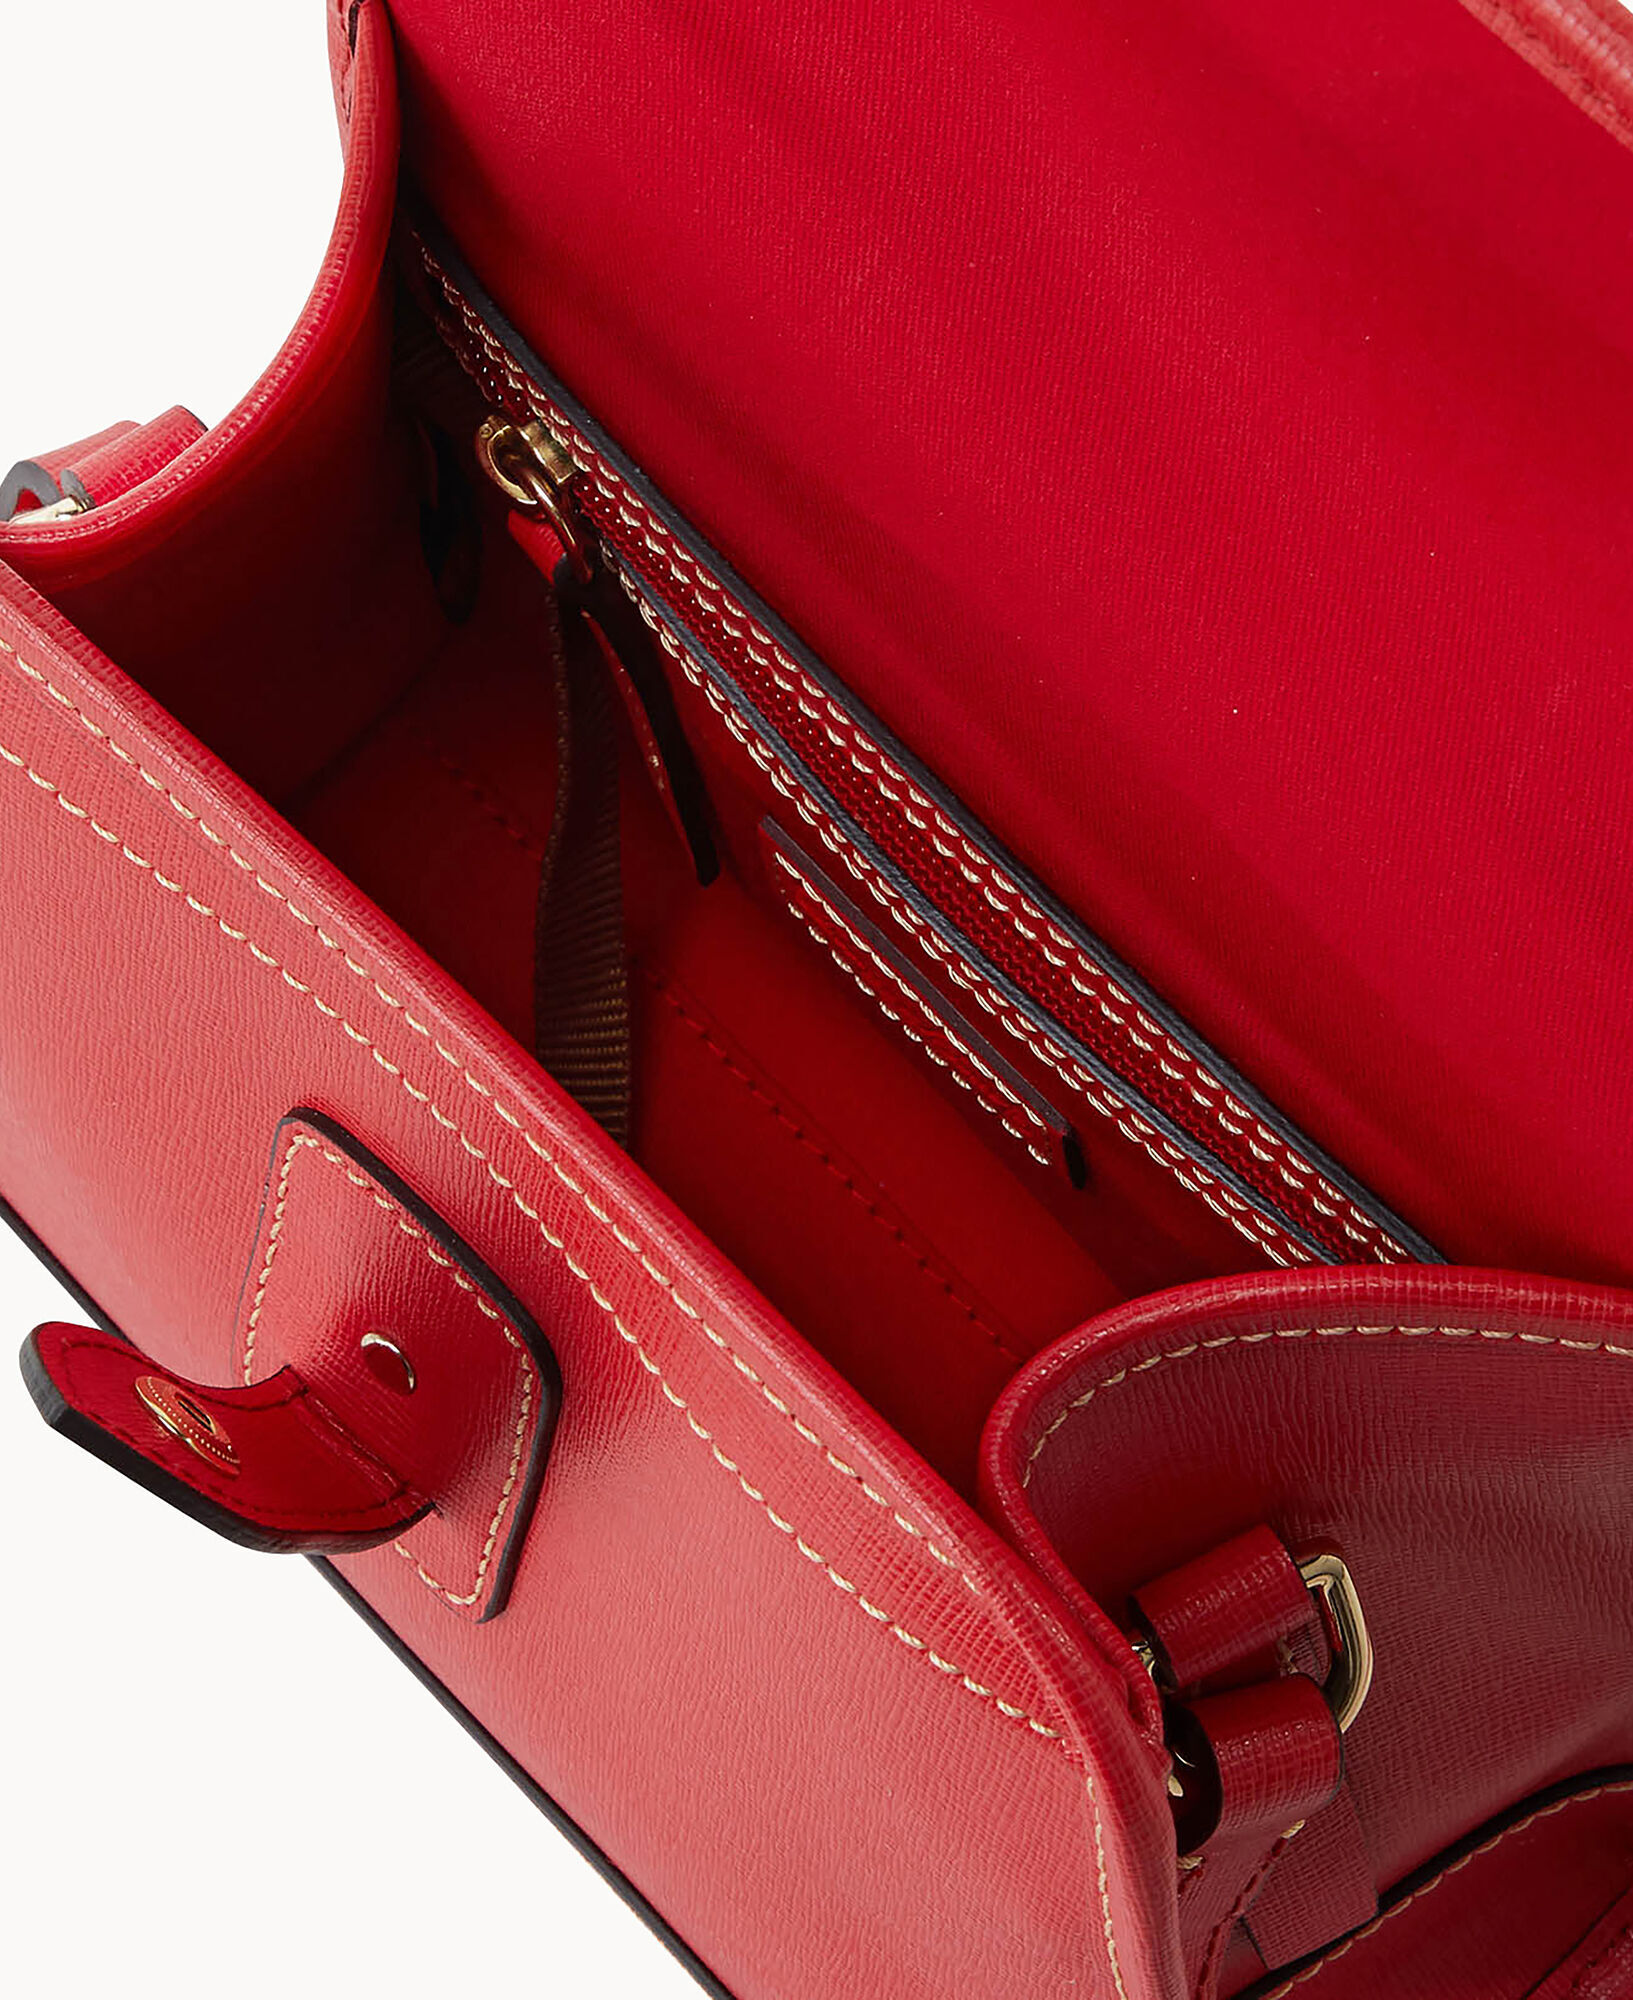 Dooney & Bourke Saffiano Leather Kimberly Crossbody in Red